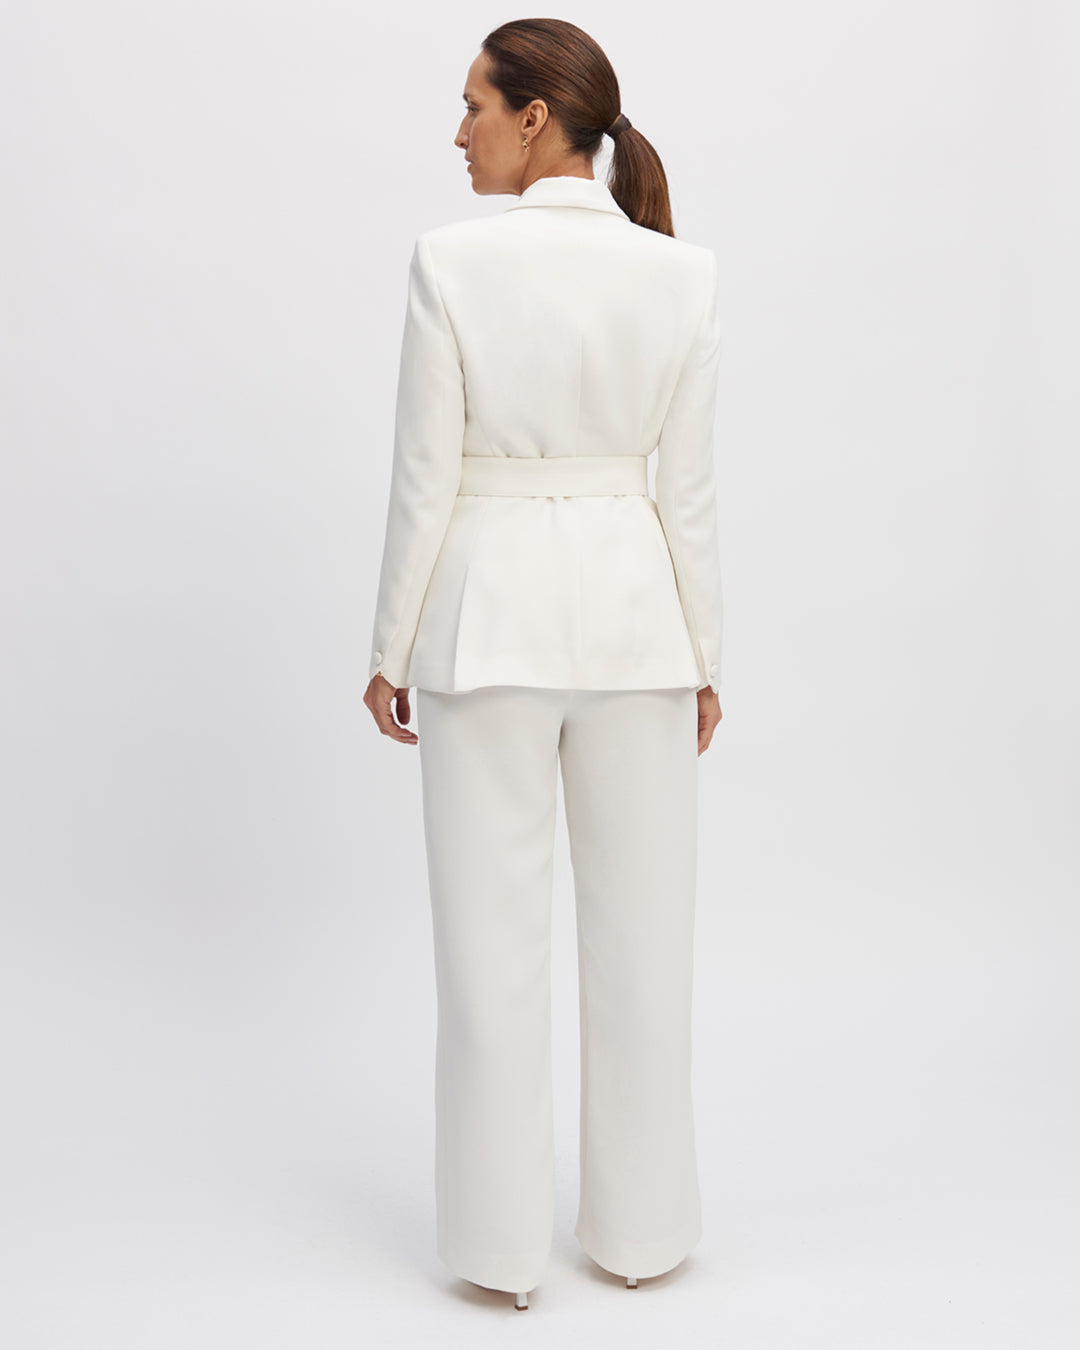 Jumpsuit-white-Cintree-size-smock-Noeud-neck-Decollete-fronce-Dos-nu-Feture-boutons-zip-cote-Jambes-larges-palazzo-17H10-tailleurs-pour-femme-paris-3